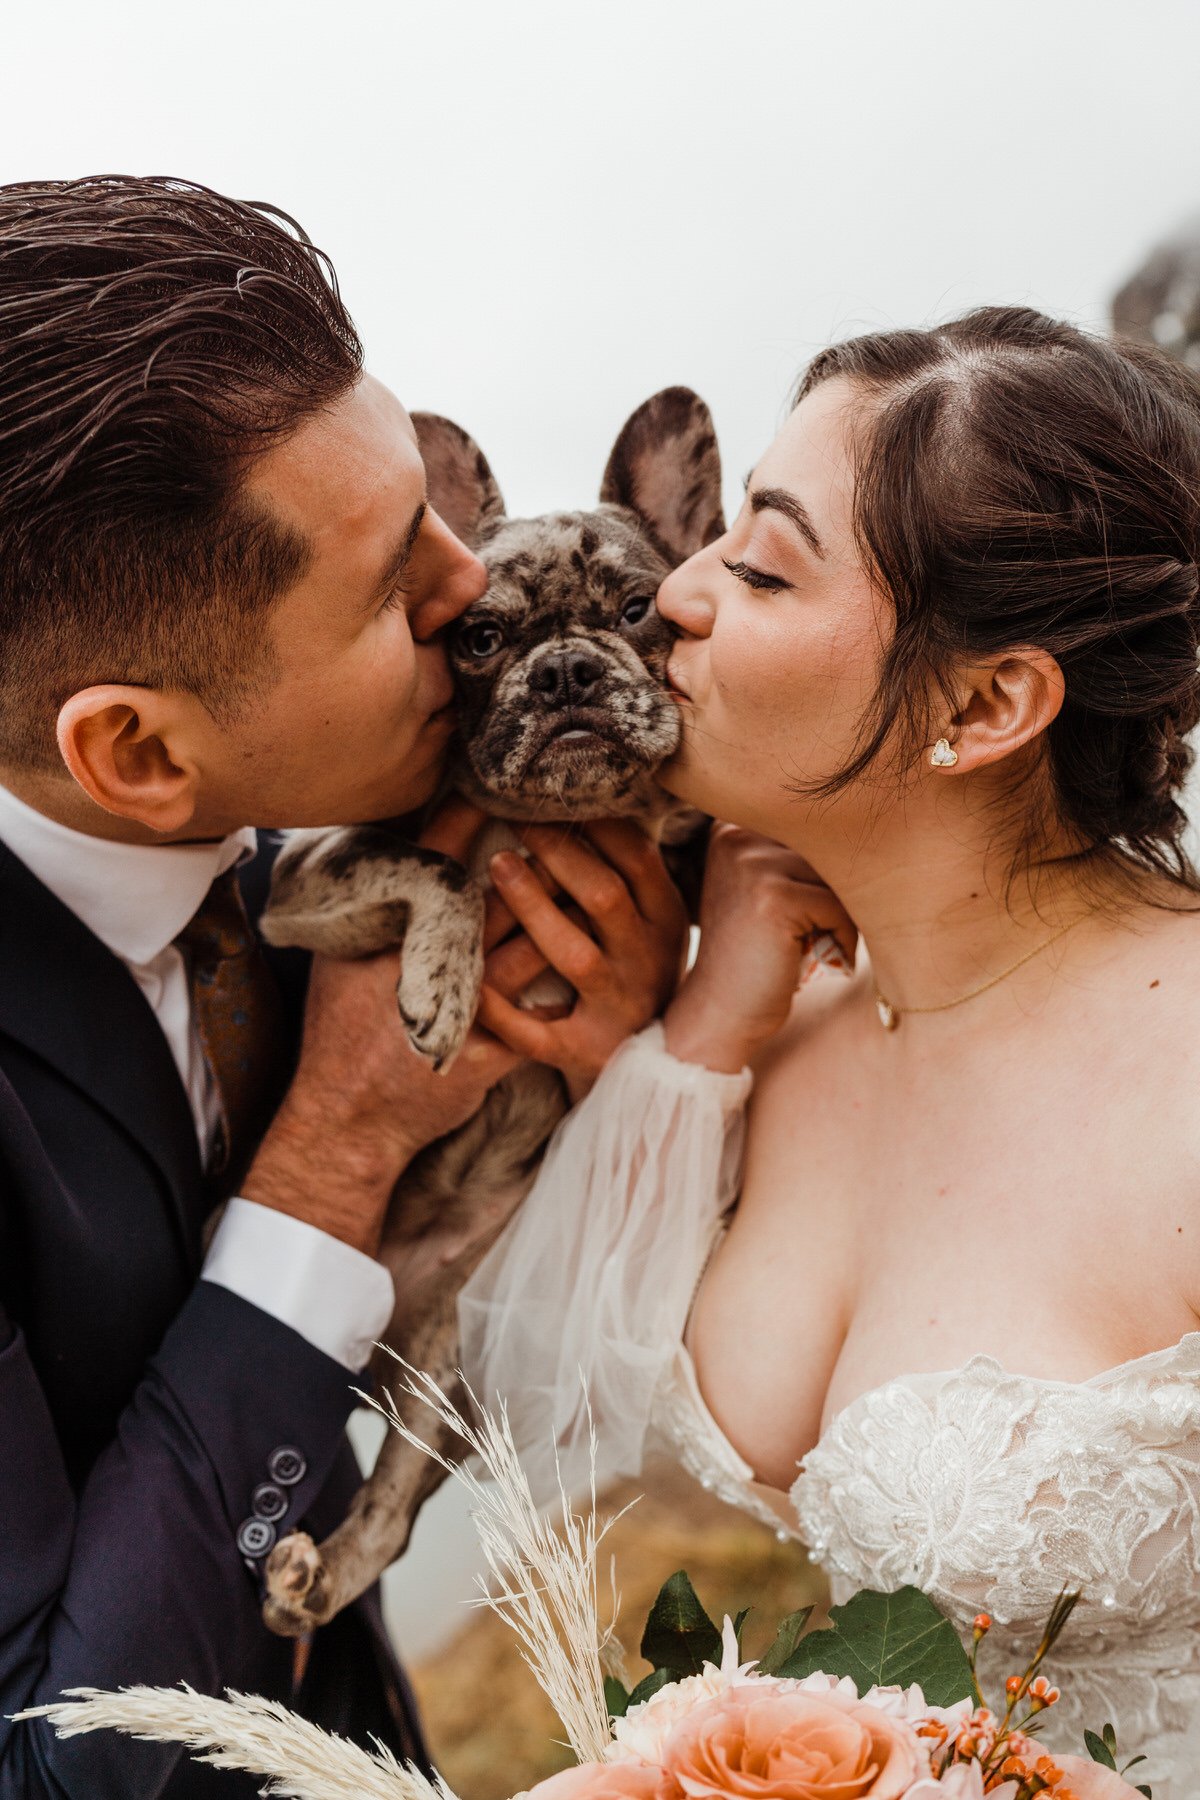 Utah couple kiss French Bulldog Puppy at Mountain Elopement | Dog-Friendly Wedding Photographer + Elopement Expert Kept Record | keptrecord.com